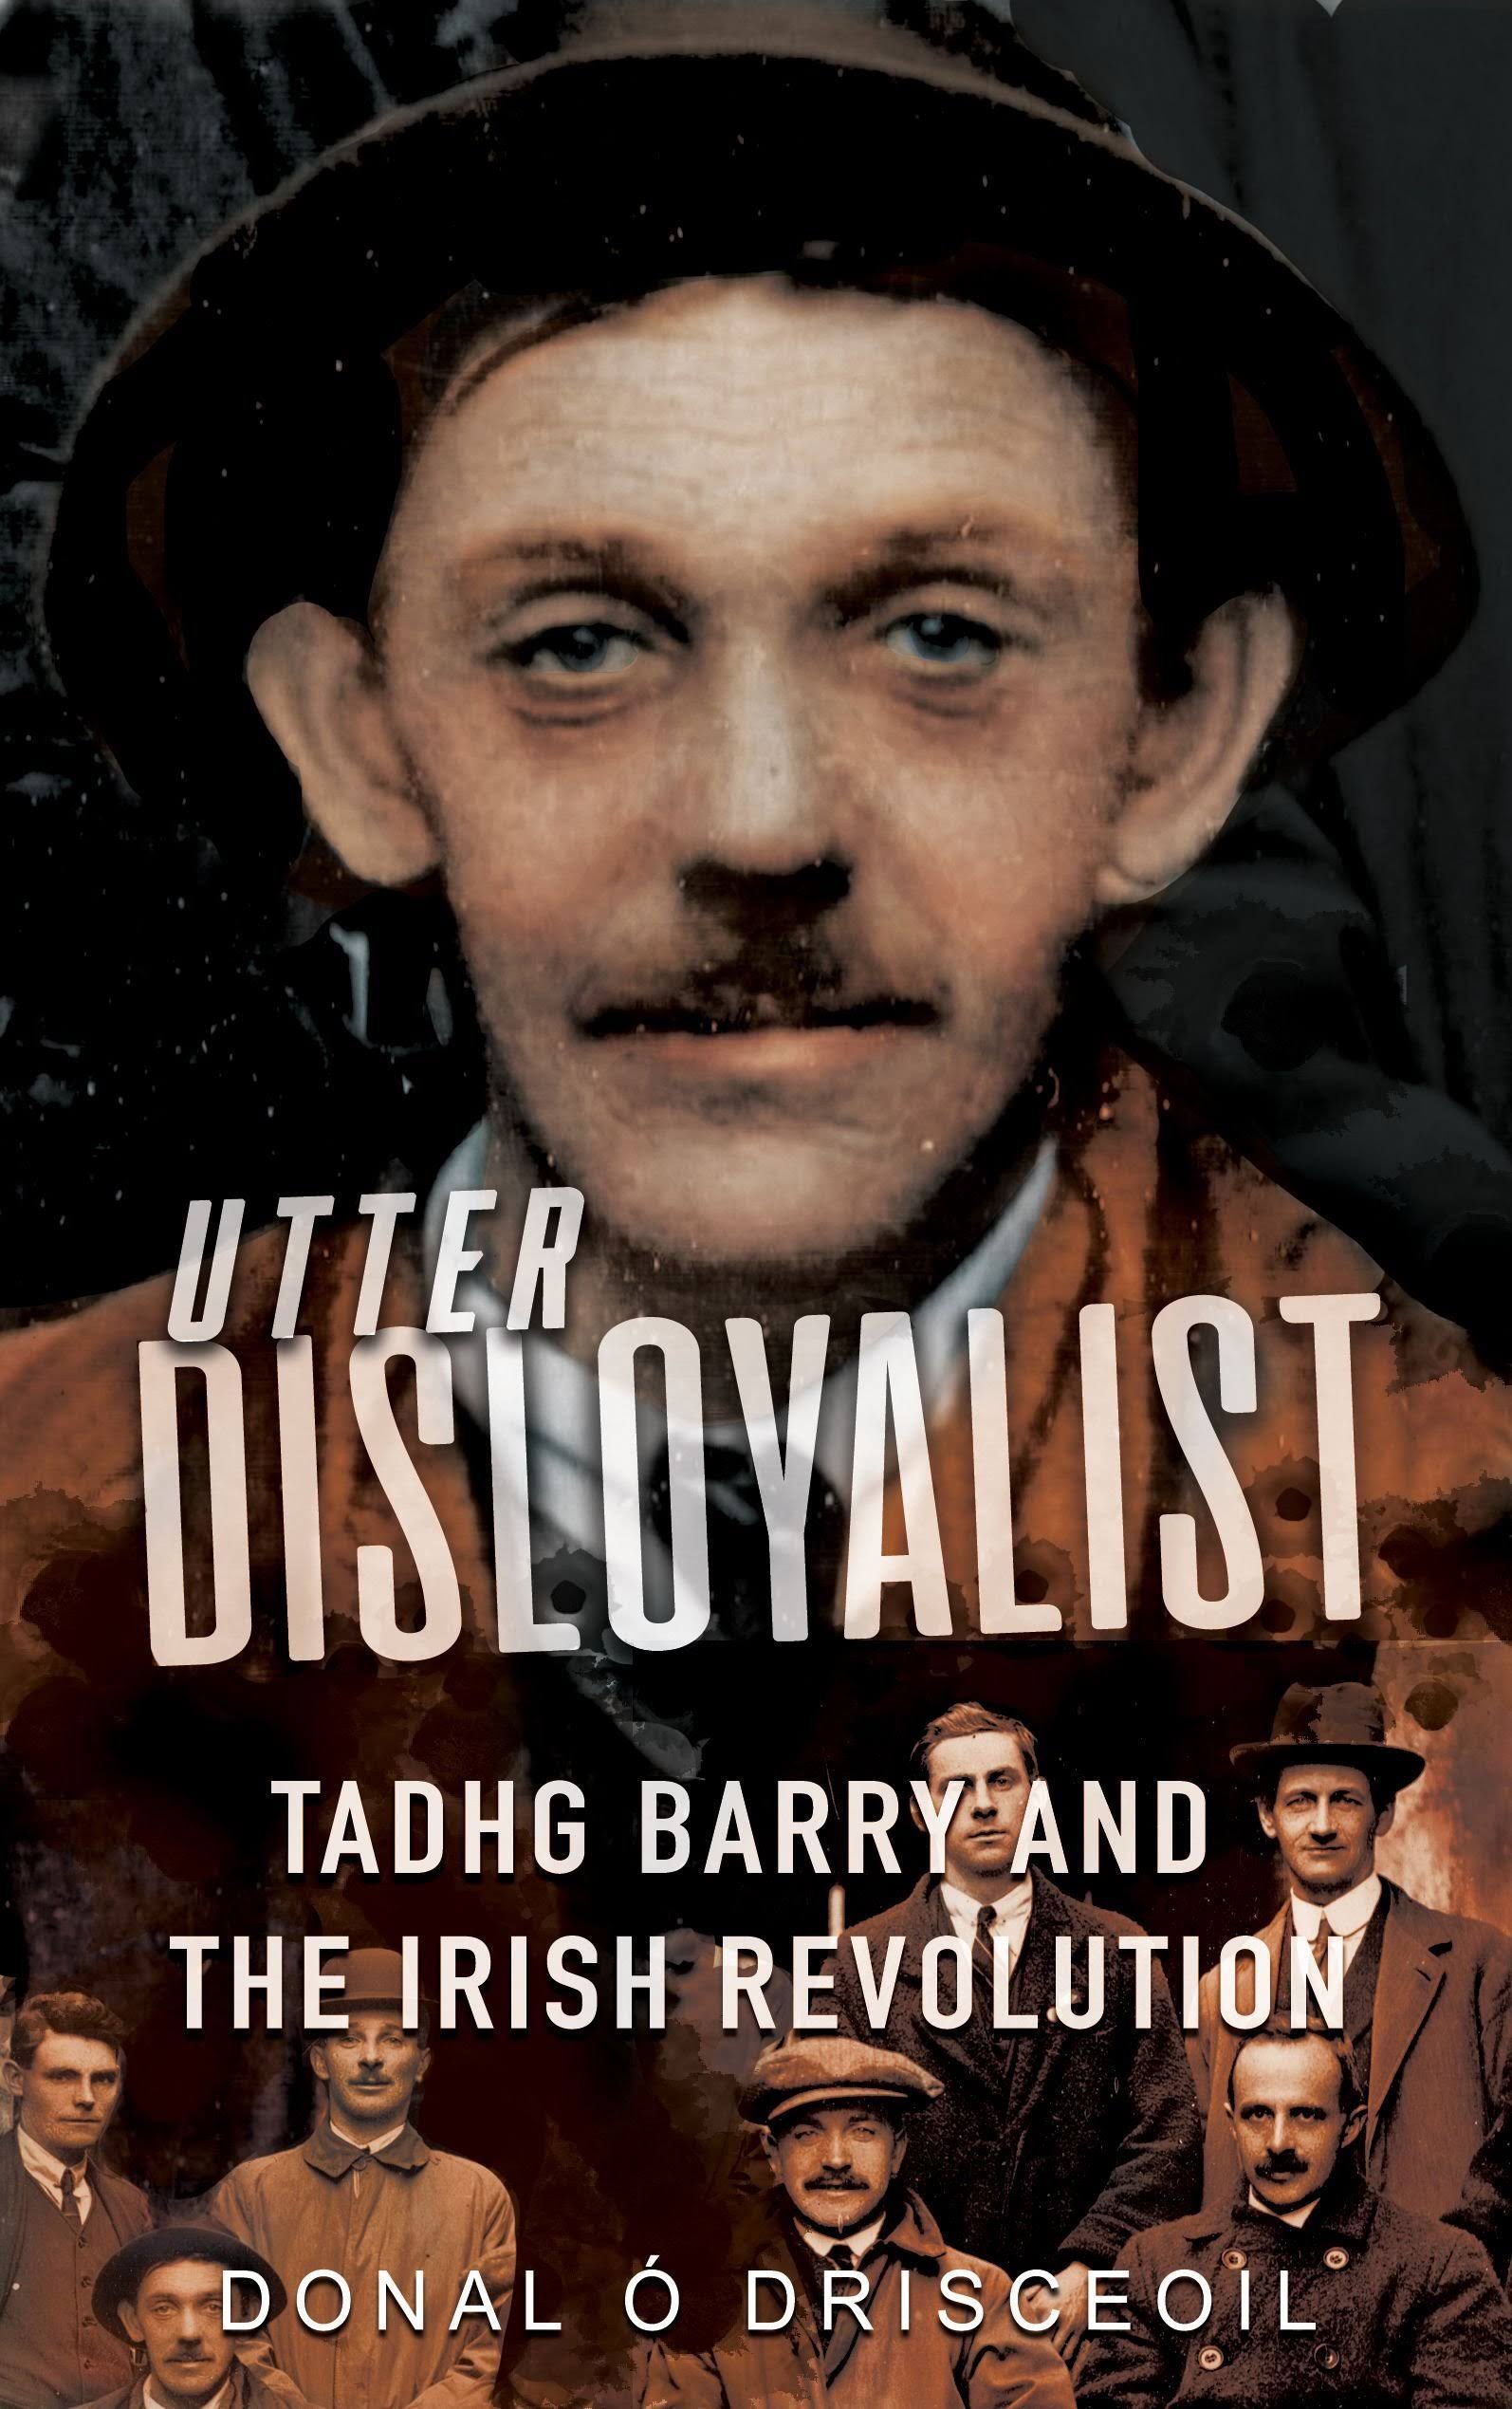 Utter Disloyalist: Tadhg Barry and the Irish Revolution [Book]